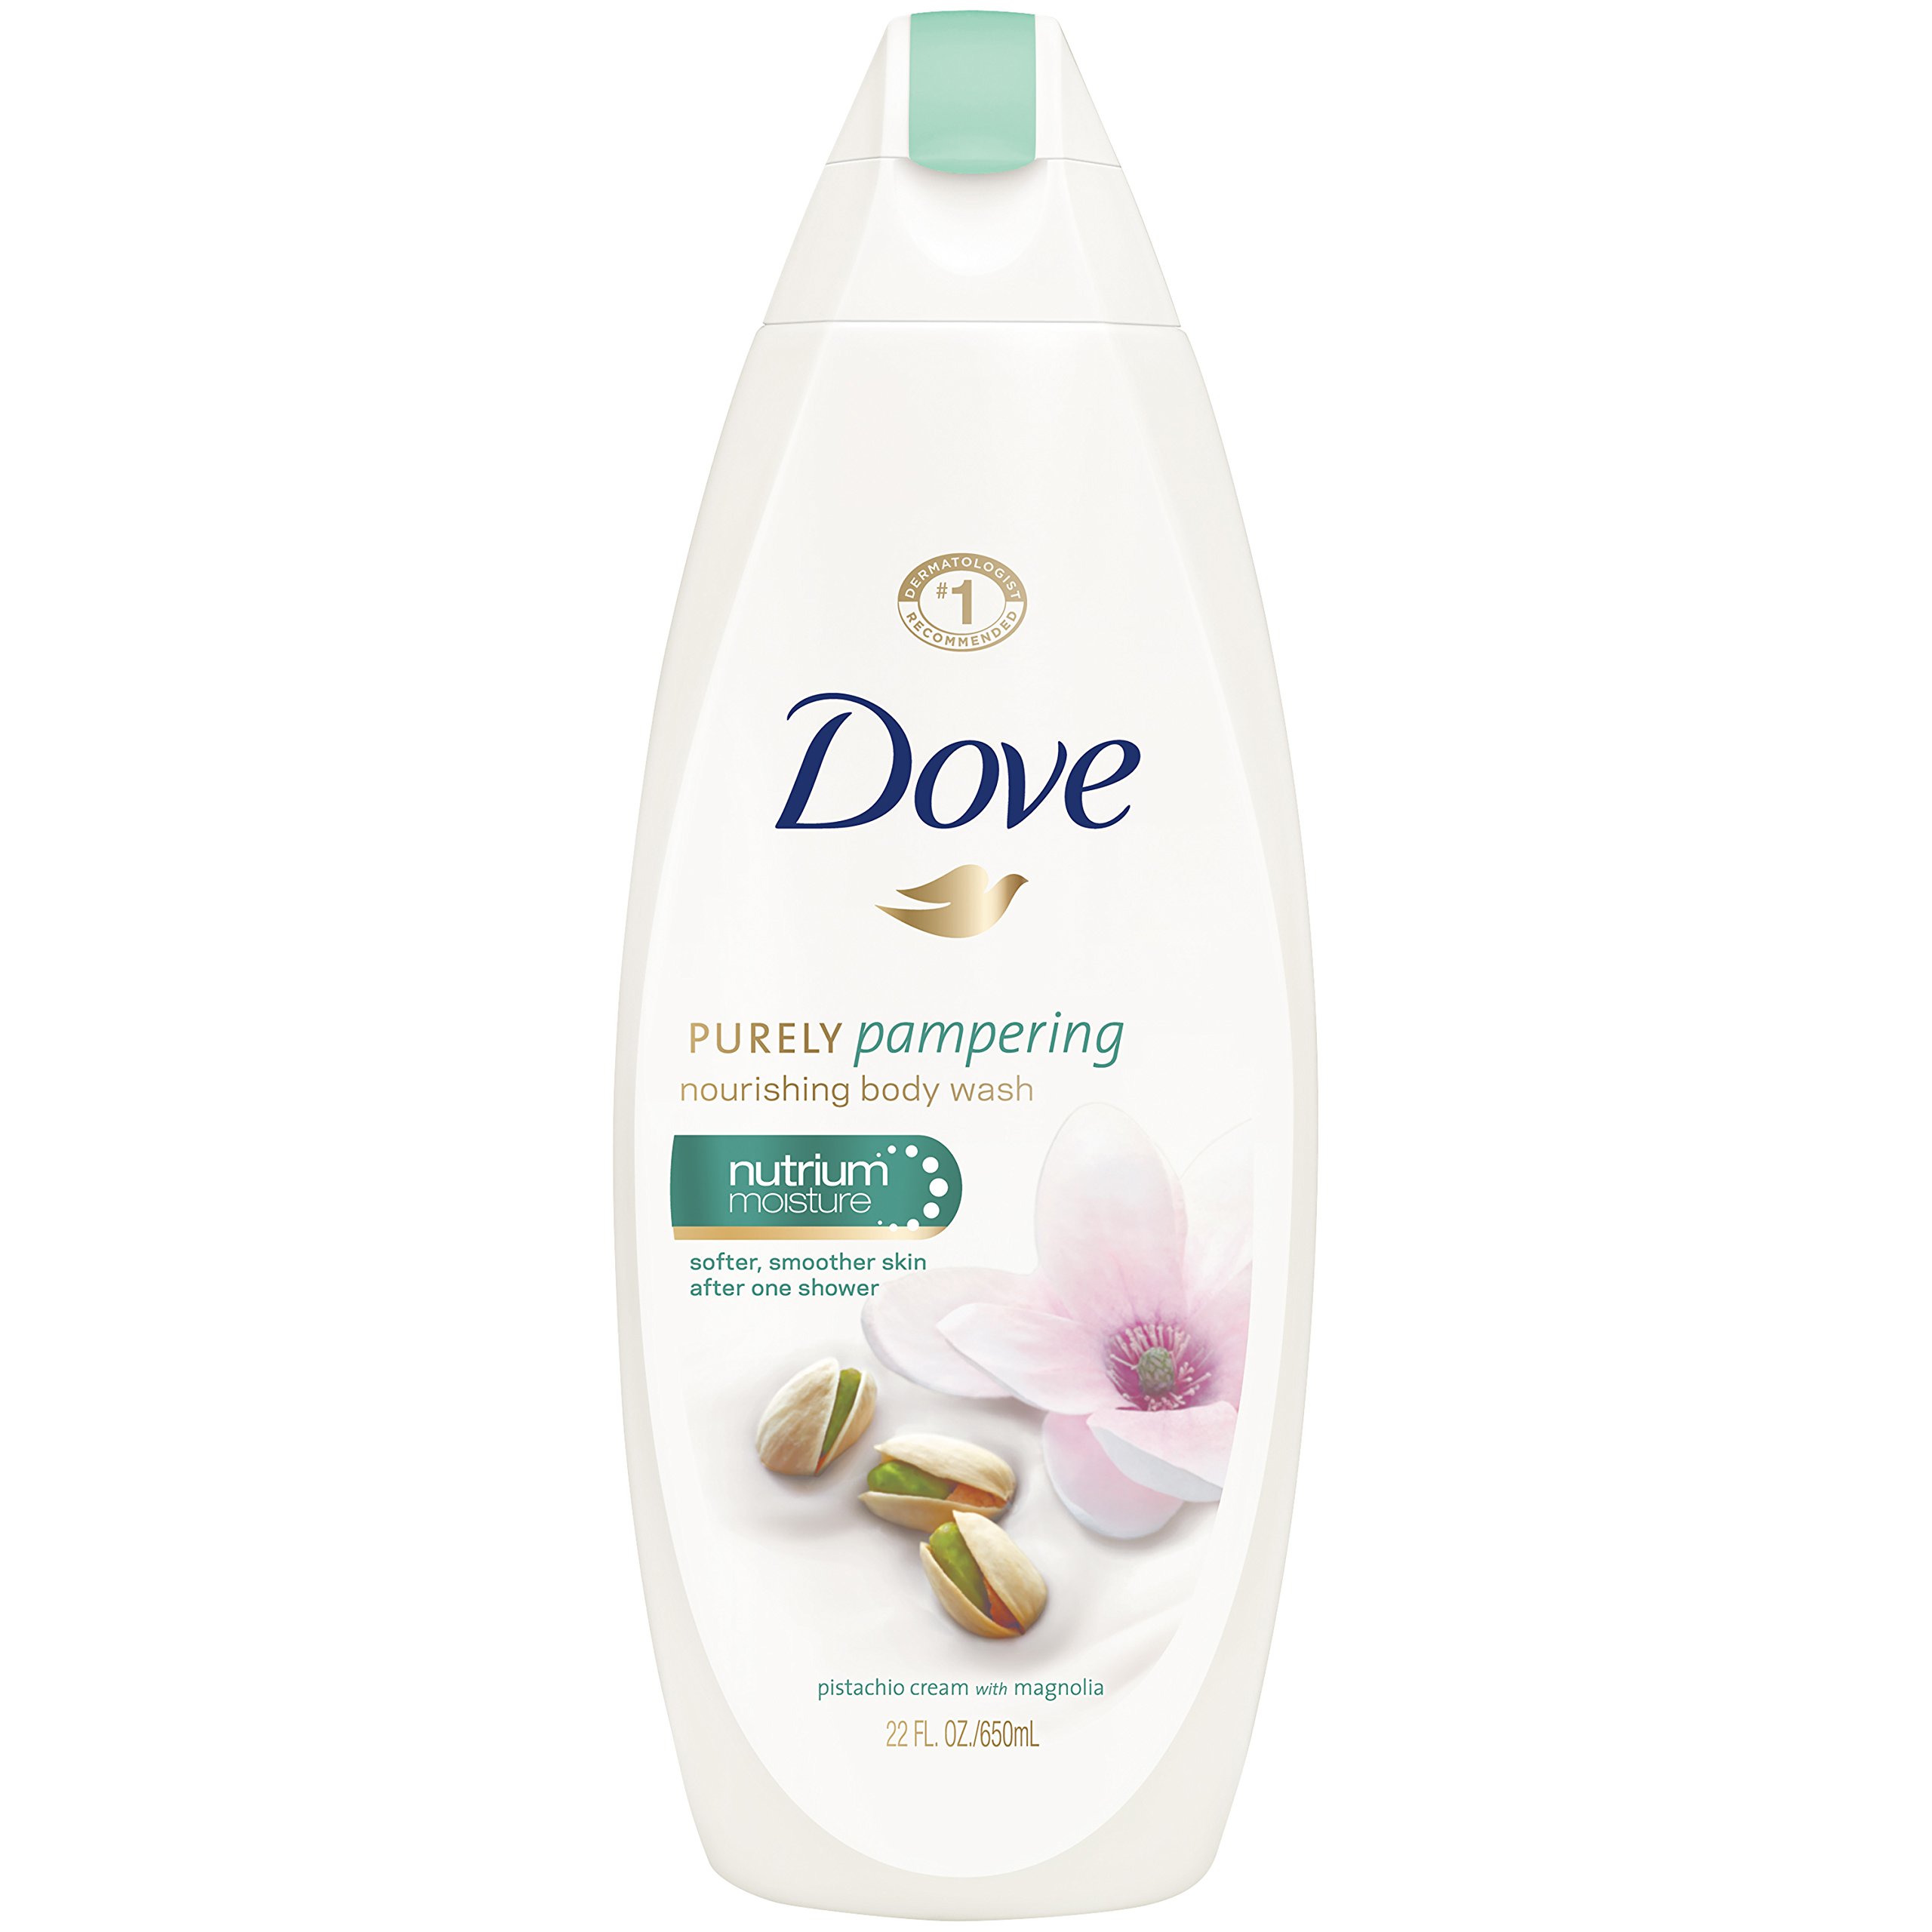 Dove Purely Pampering Body Wash, Pistachio Cream with Magnolia 22 Fl Oz (1 Count)